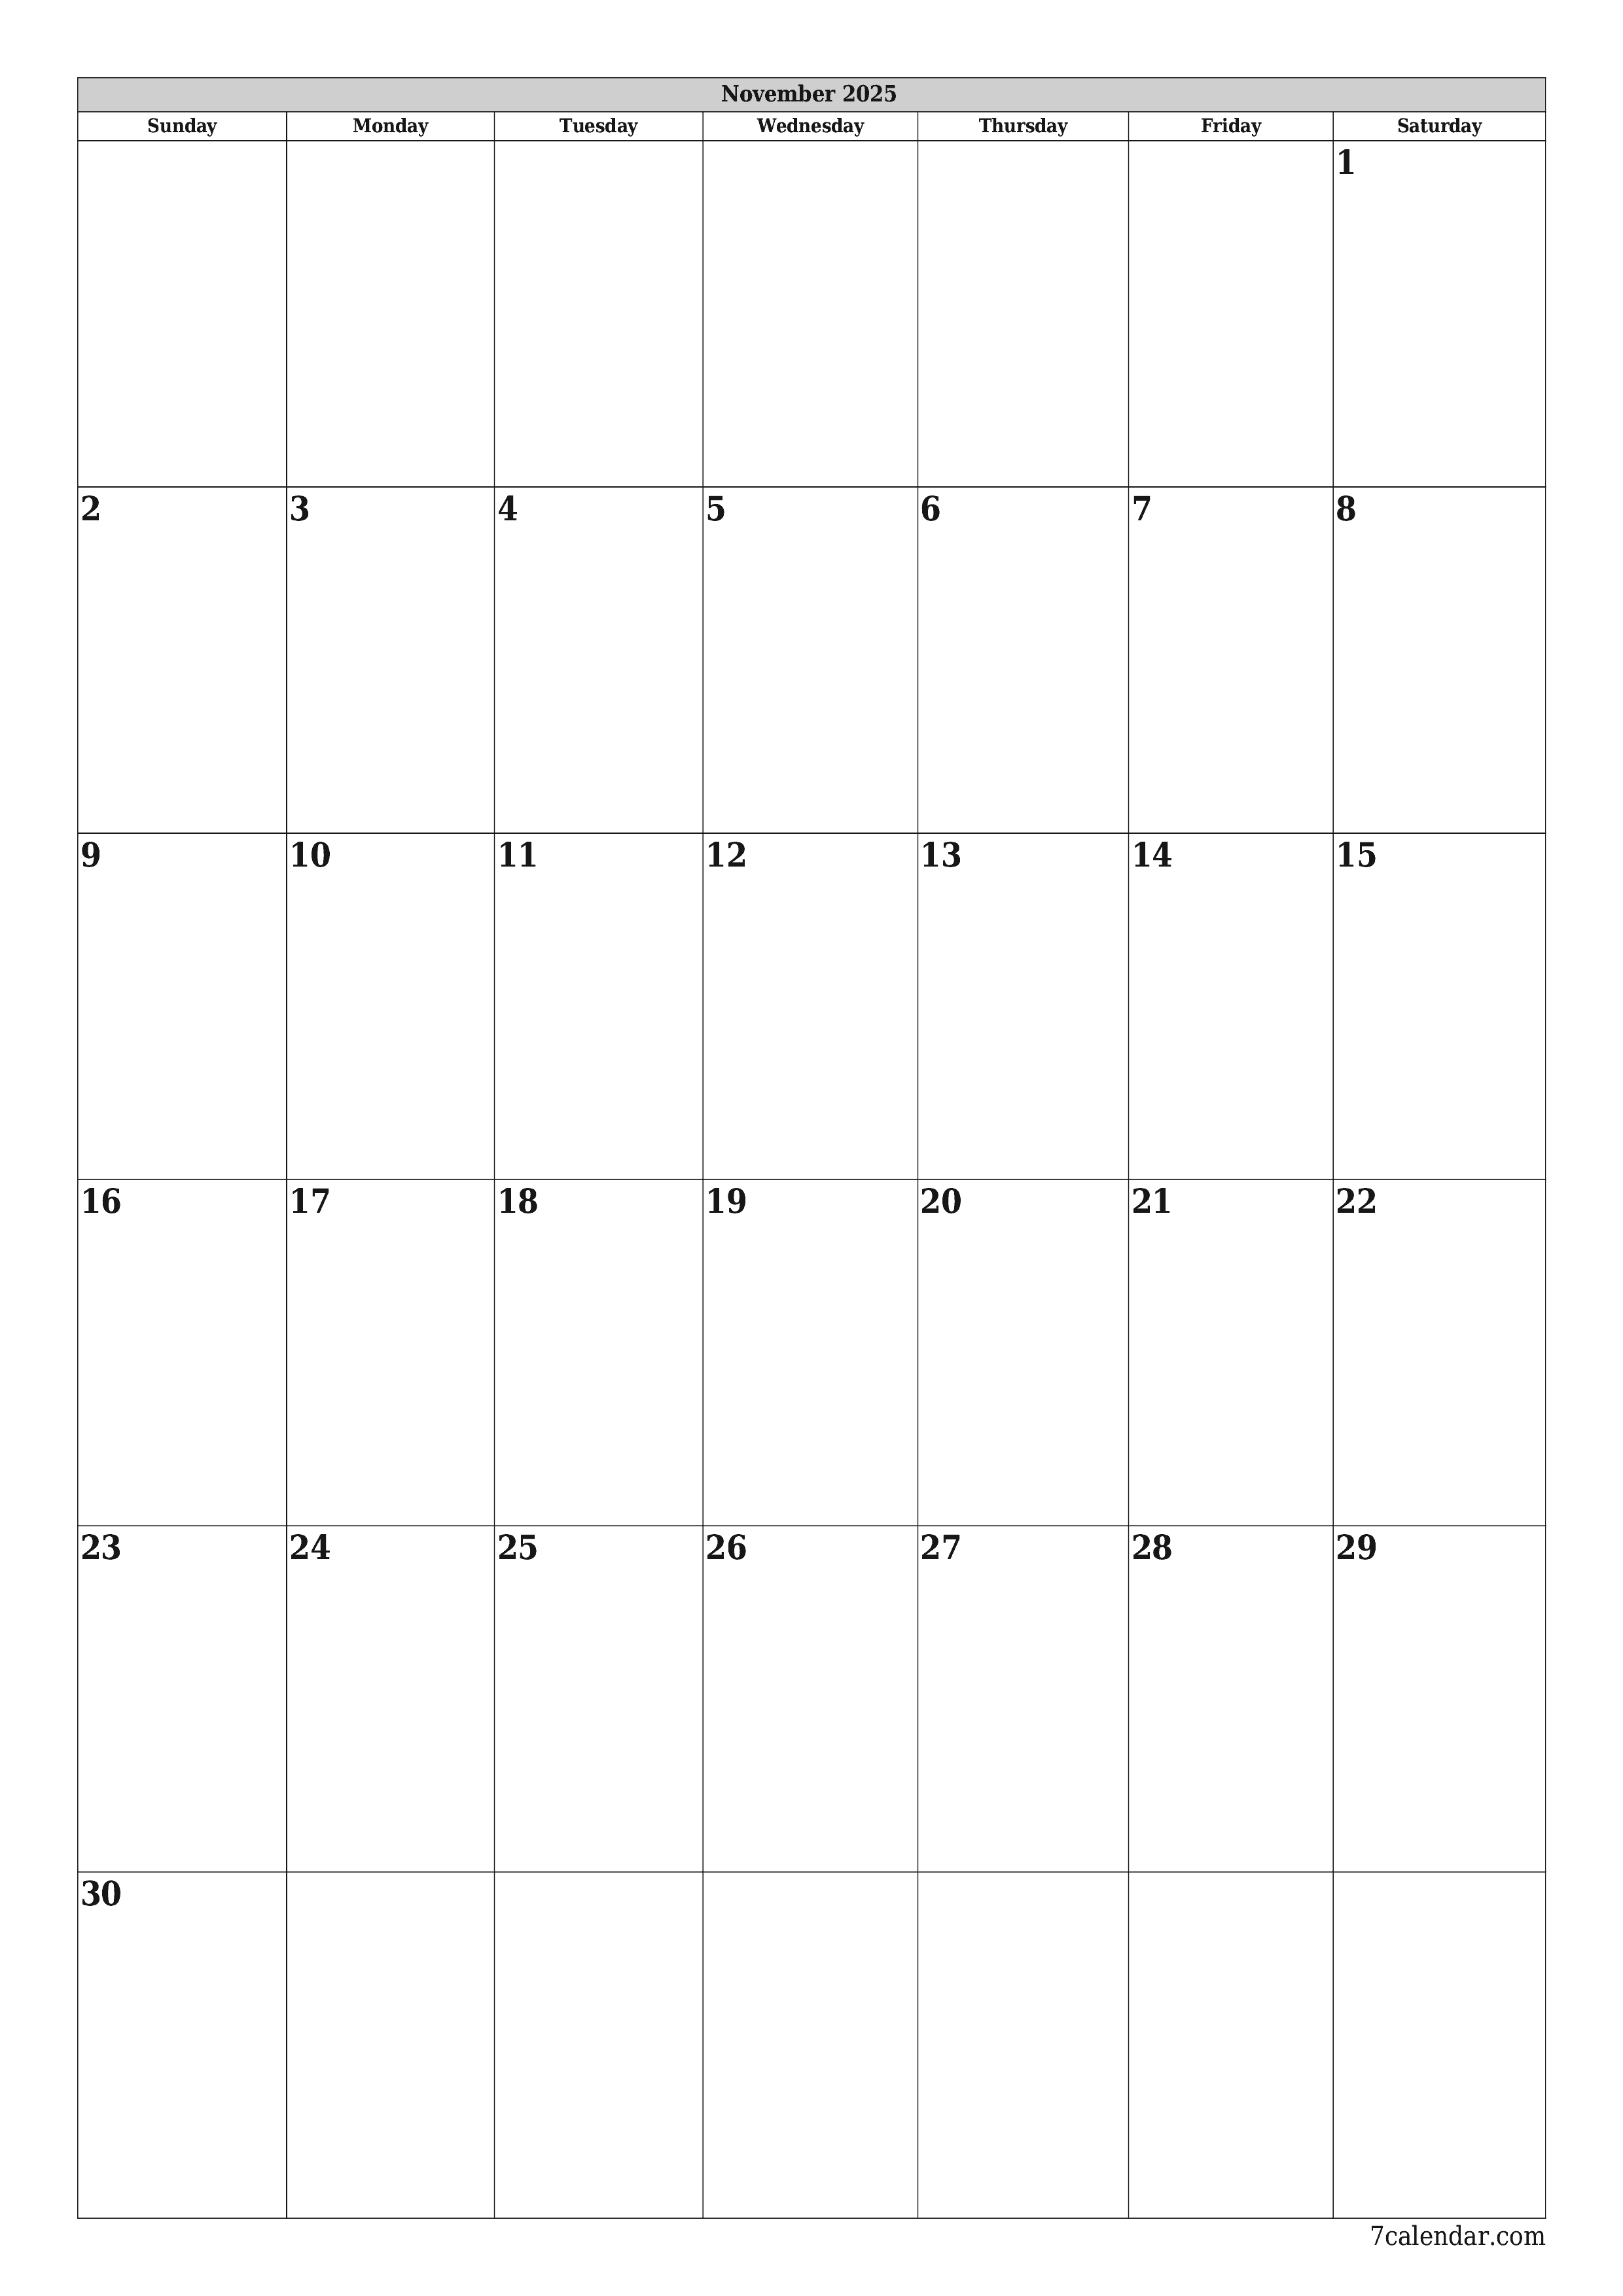 printable wall template free vertical Monthly planner calendar November (Nov) 2025